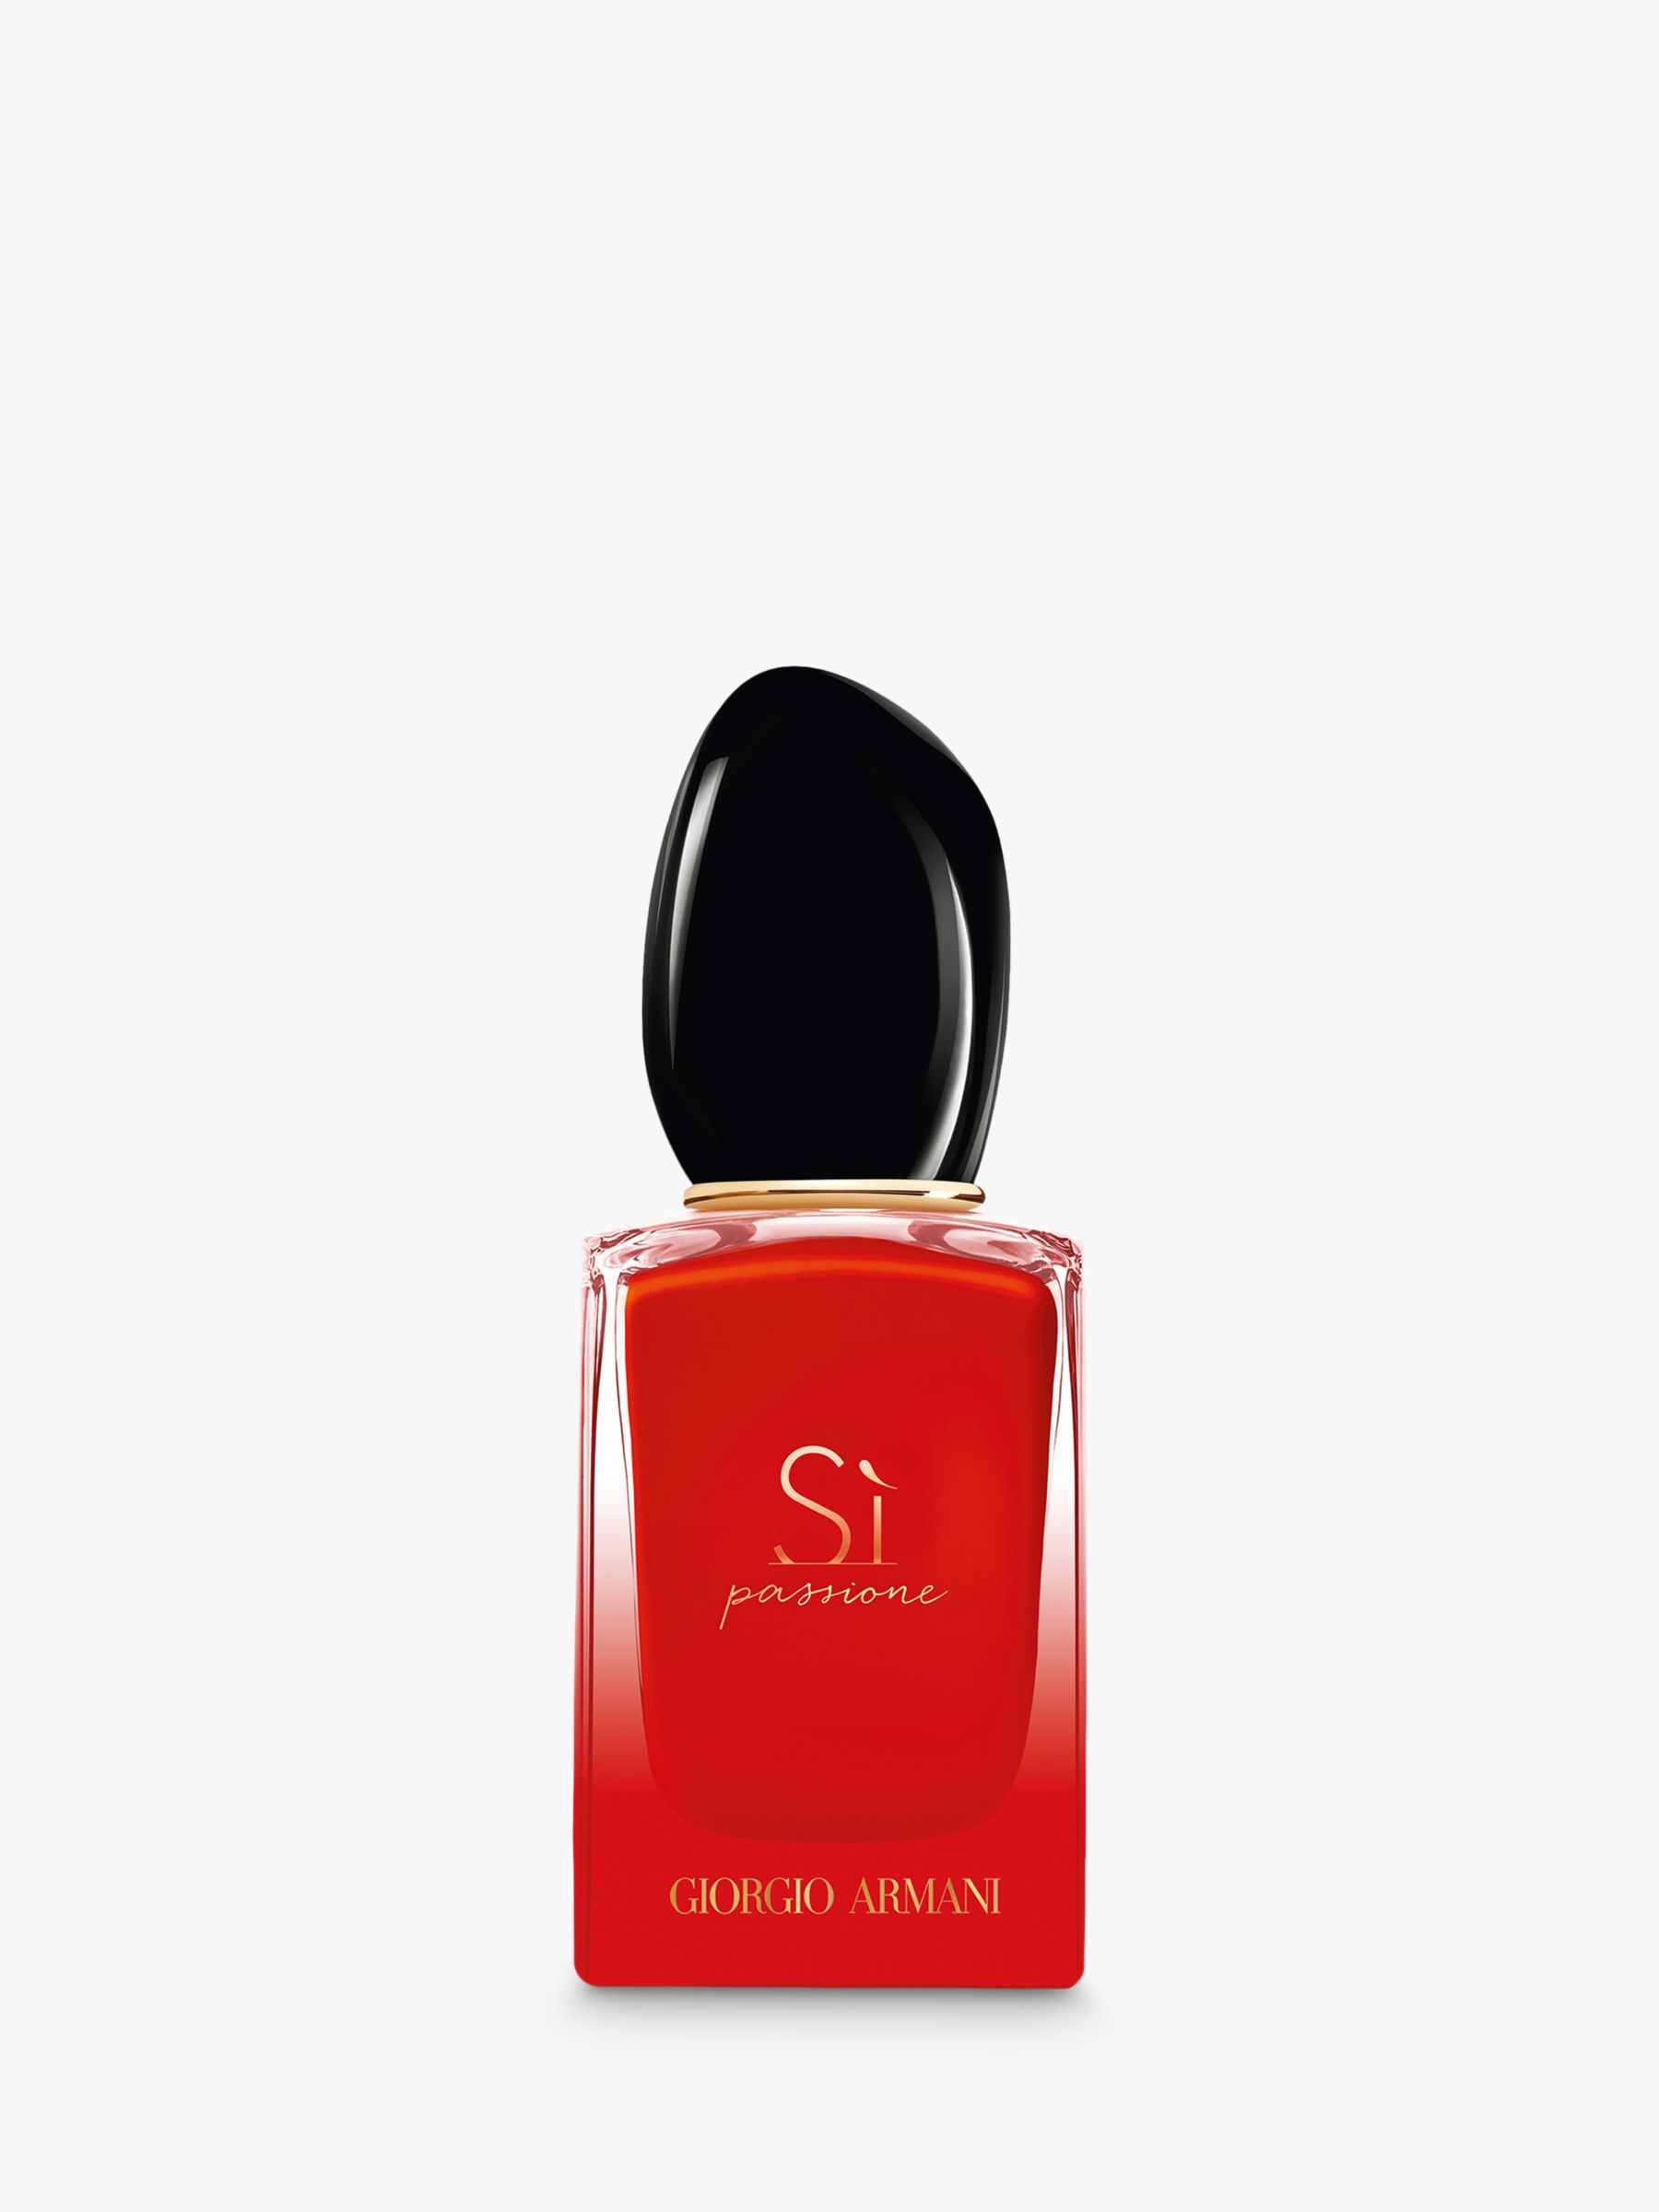 Giorgio Armani Si Passione Eau De Parfum Intense, at John Lewis & Partners